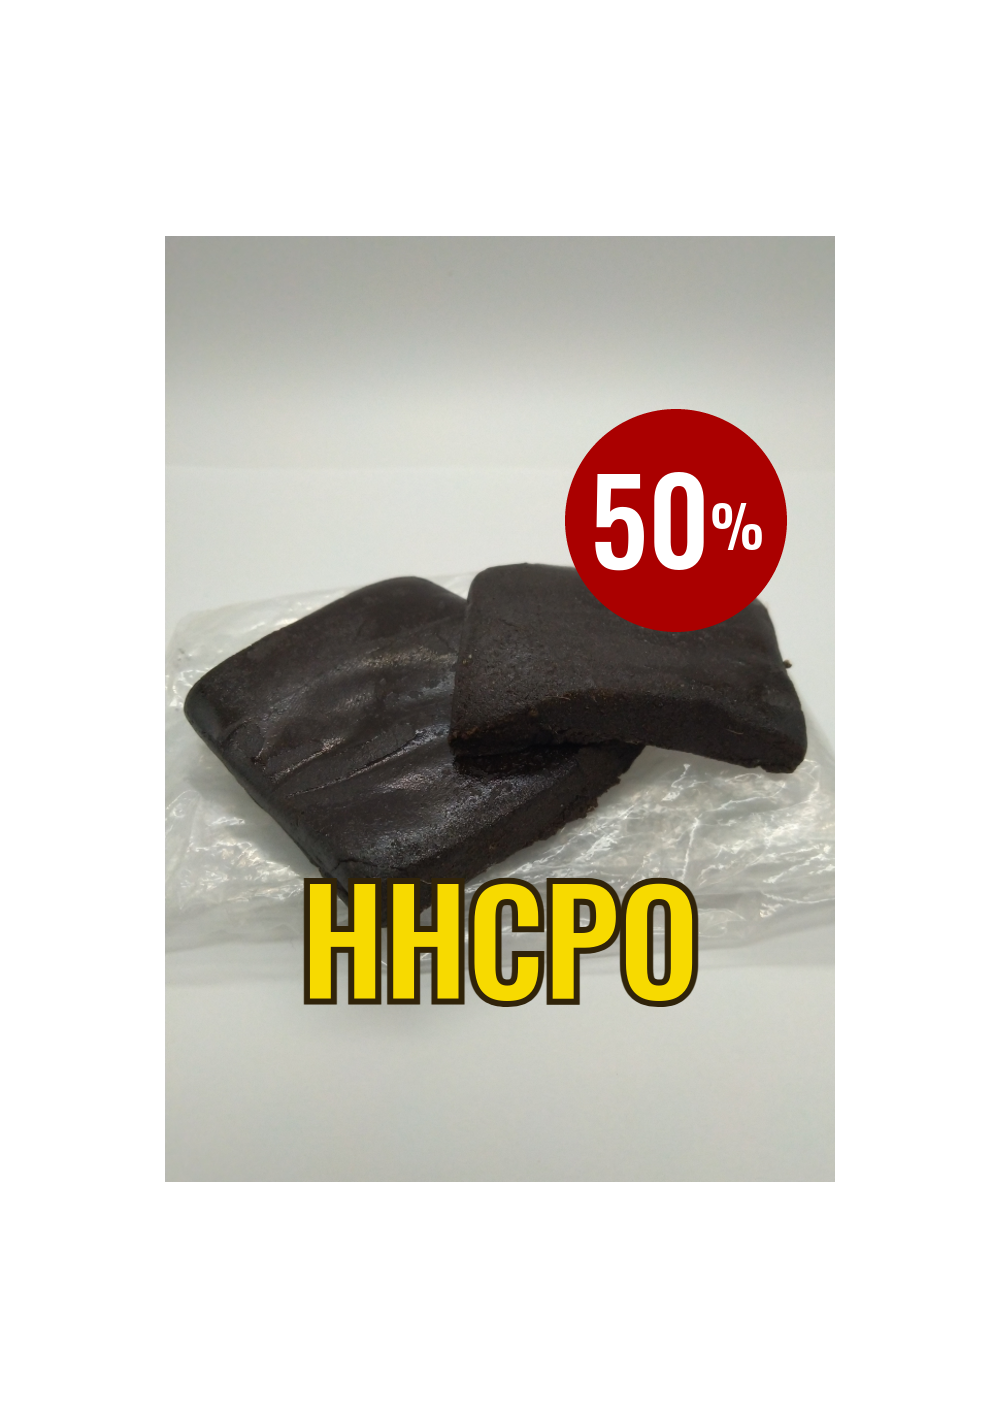 HHCPO Hash - Burbuka 50% HHCPO - Special Hashish - Naturally extracted